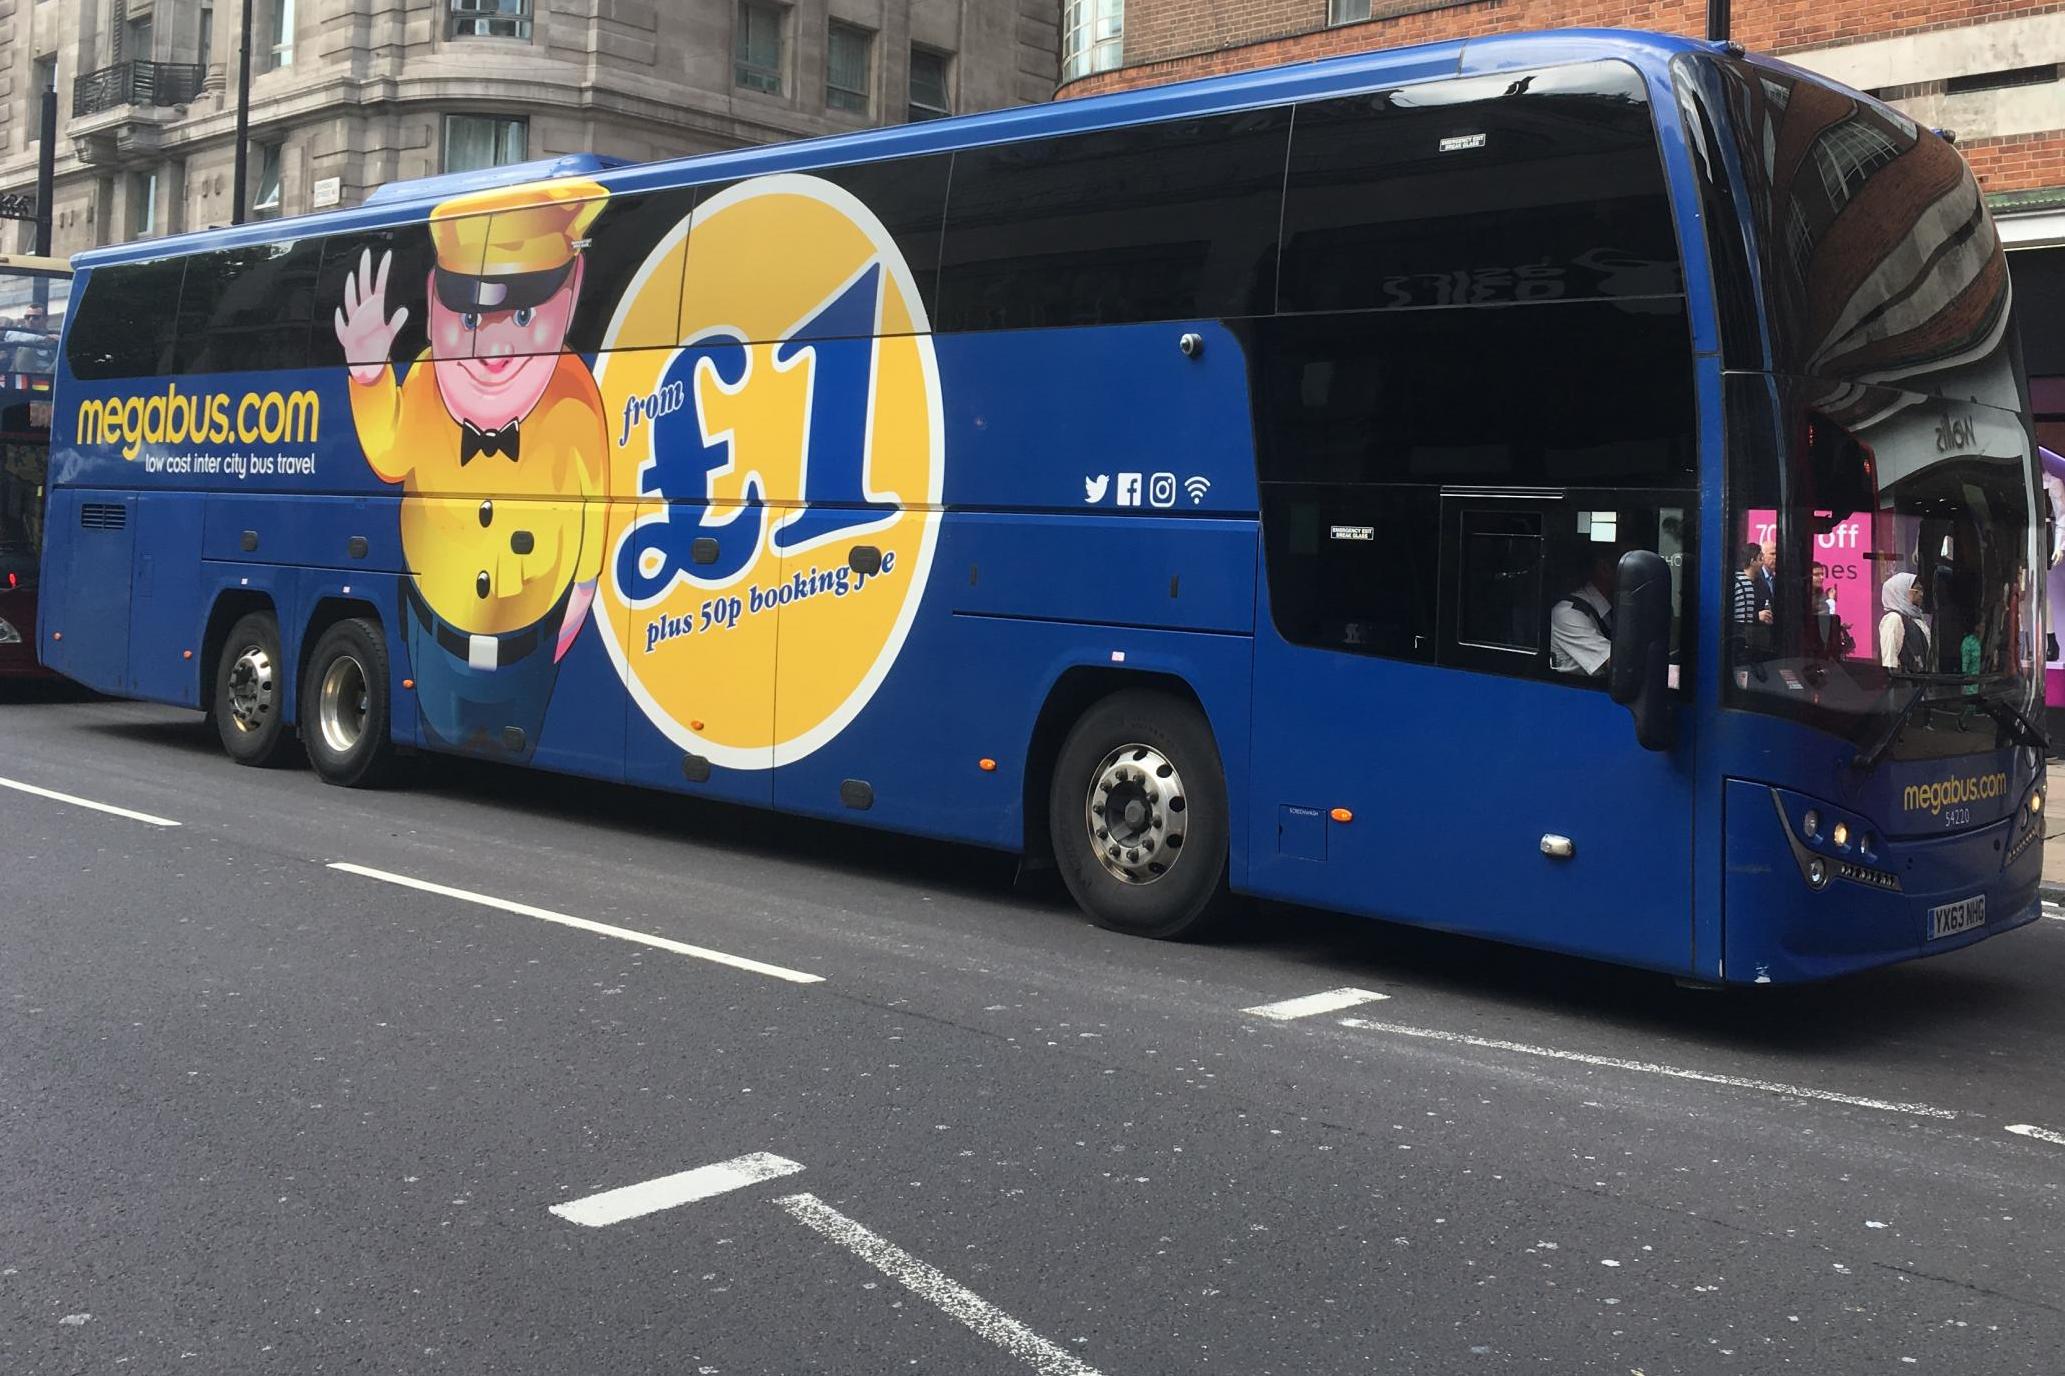 Better days: a Megabus coach in Oxford Street, London